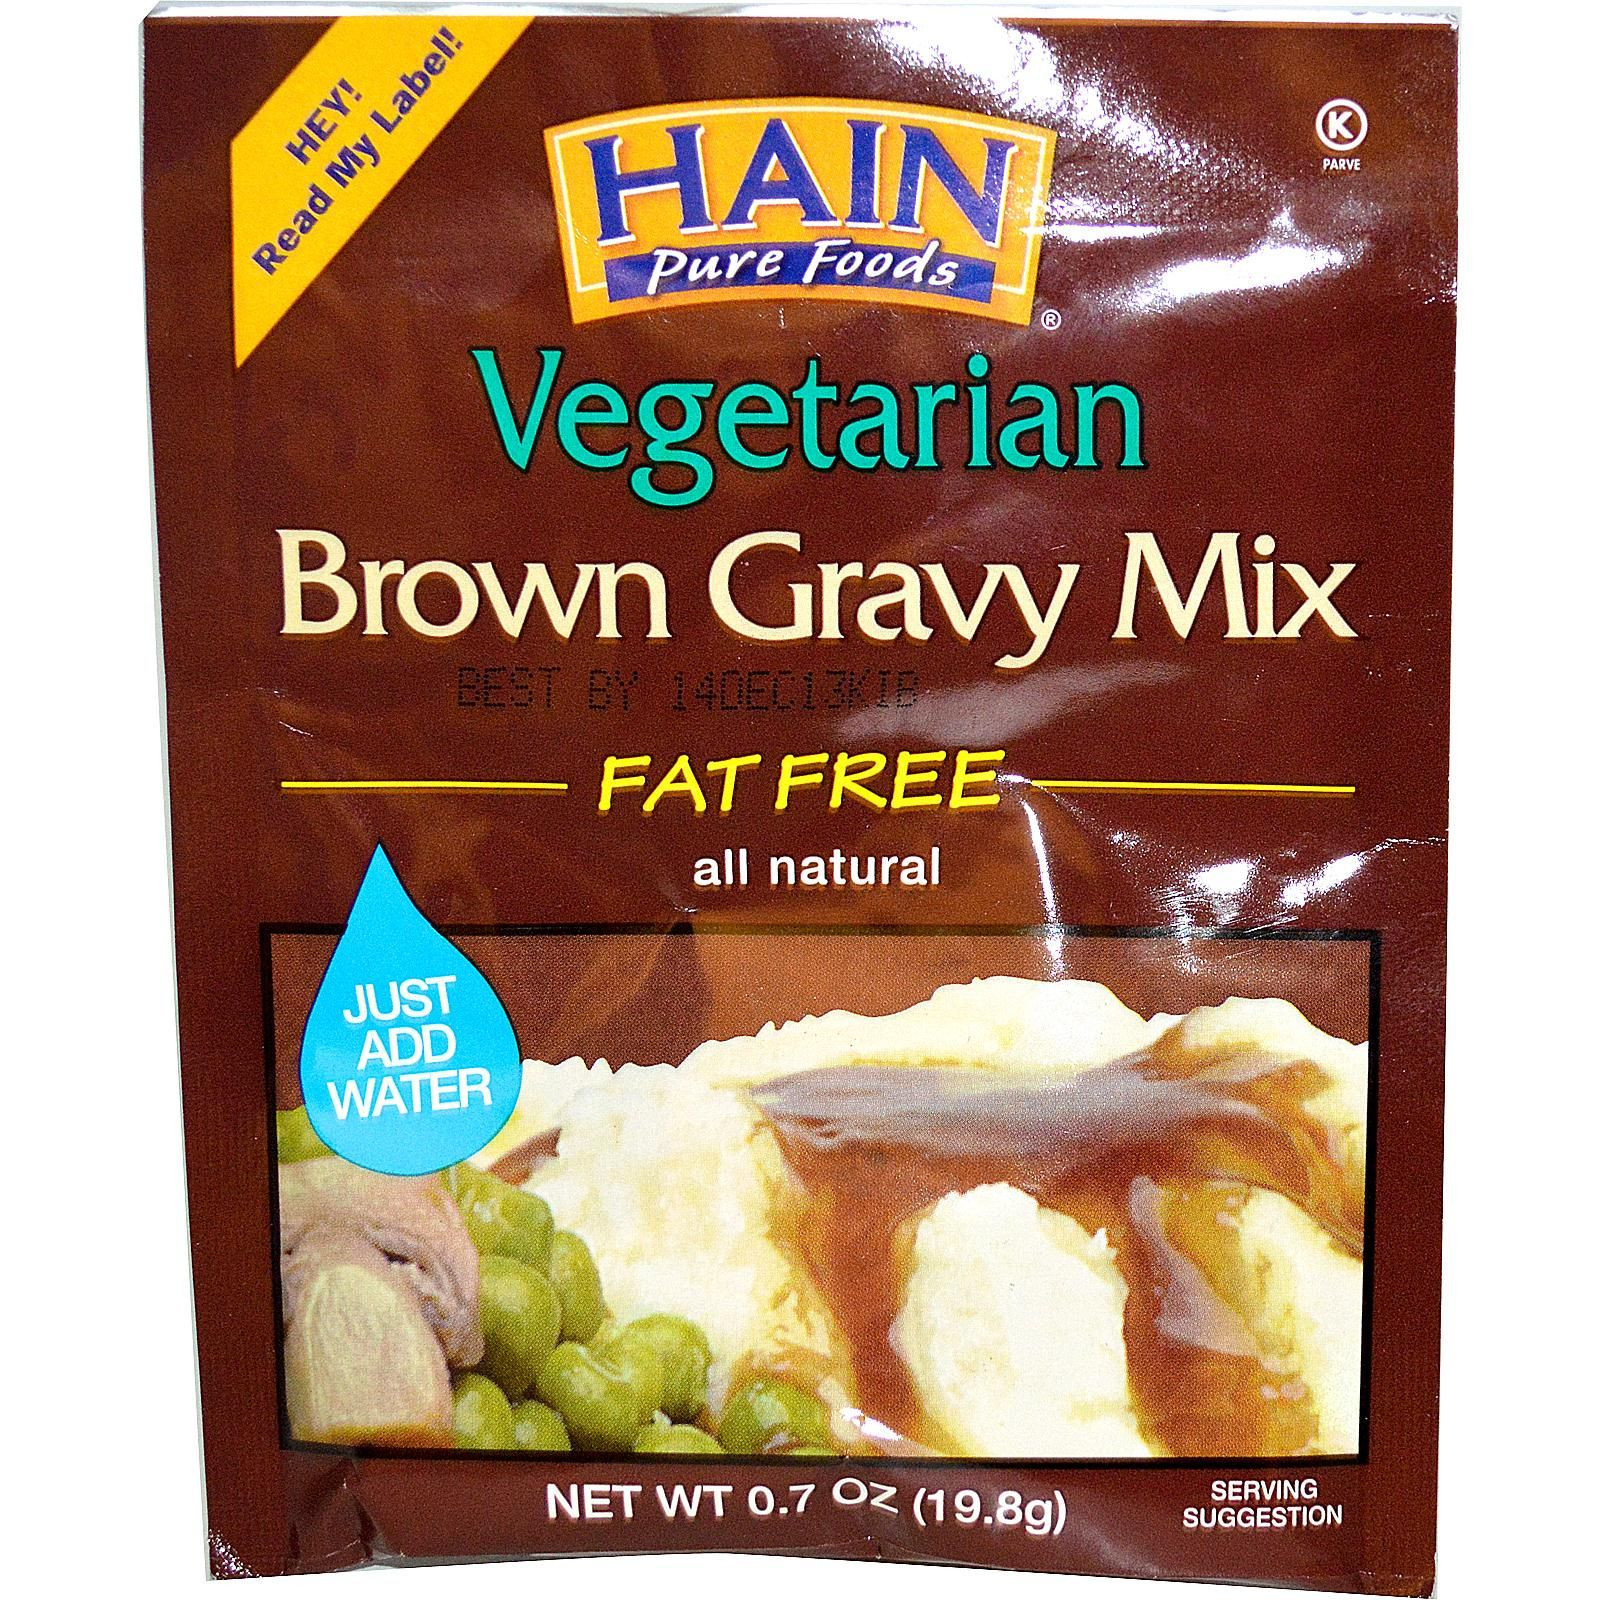 Vegan Gravy Mix
 Hain Pure Foods Ve arian Brown Gravy Mix 0 7 oz 19 8